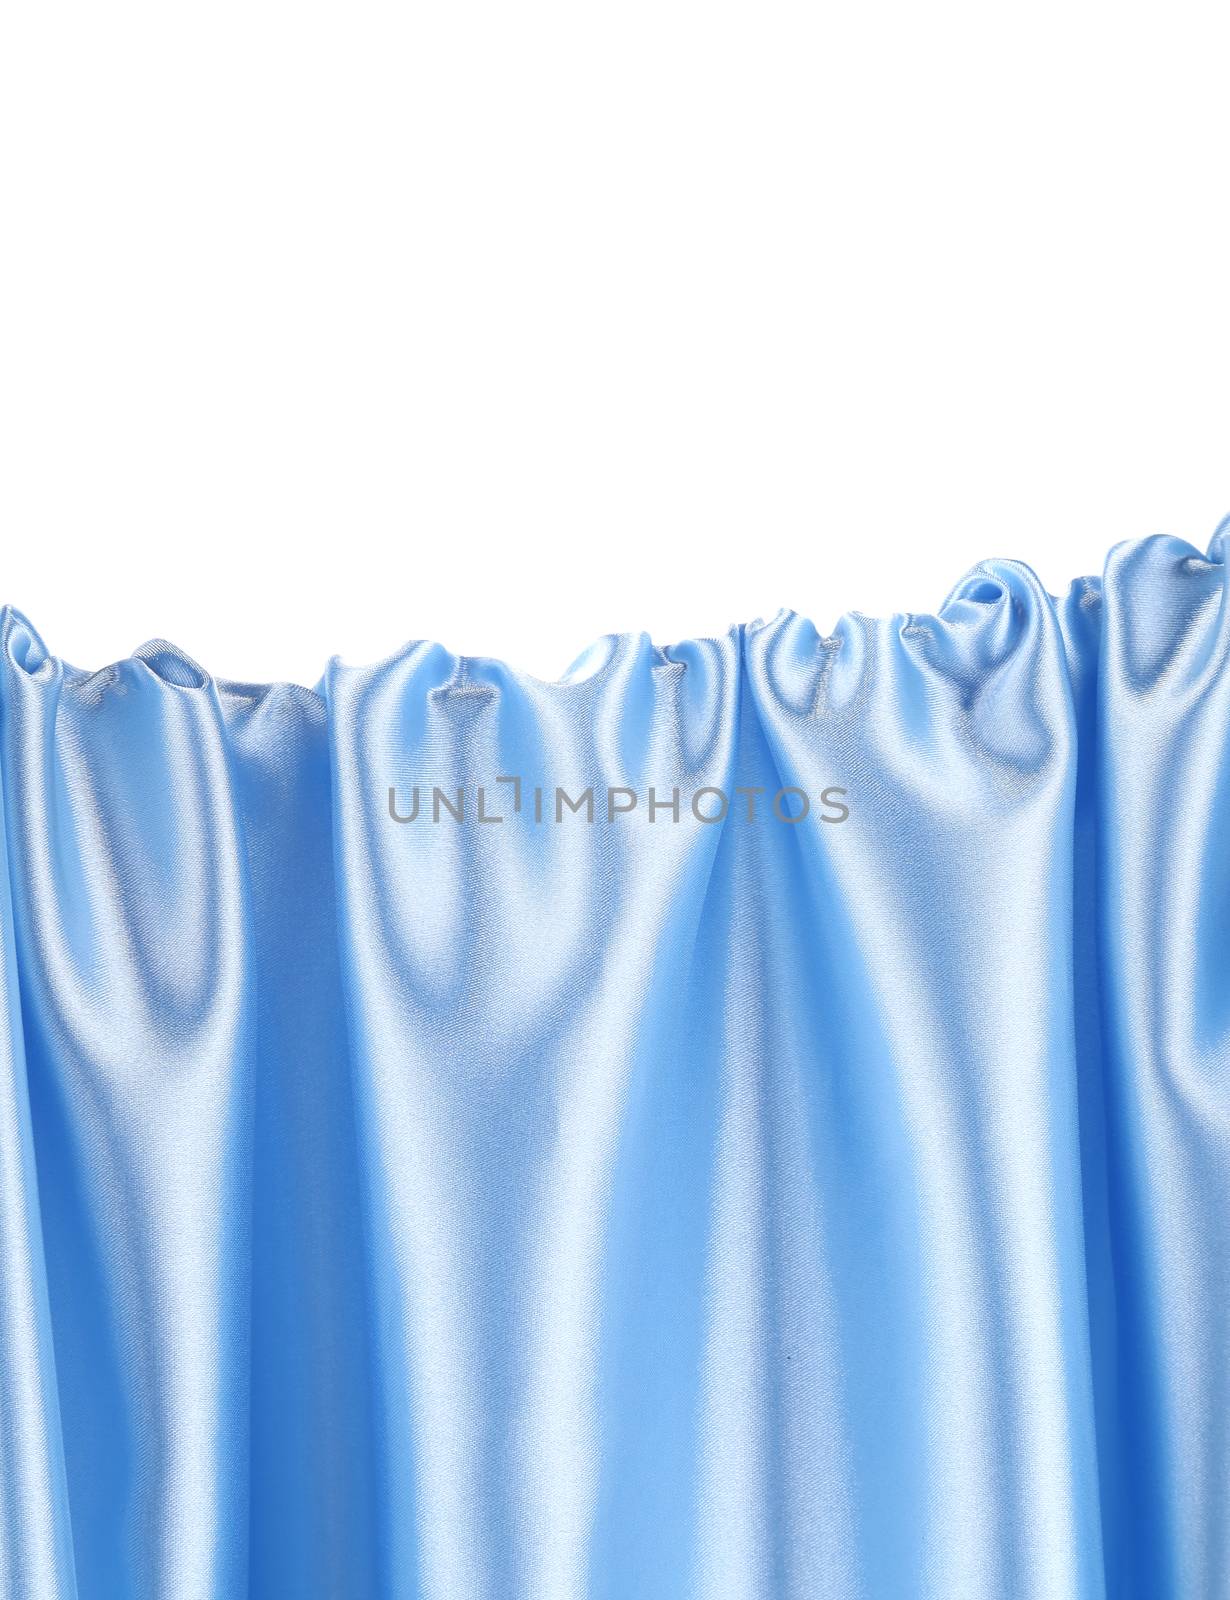 Light blue cloth. by indigolotos